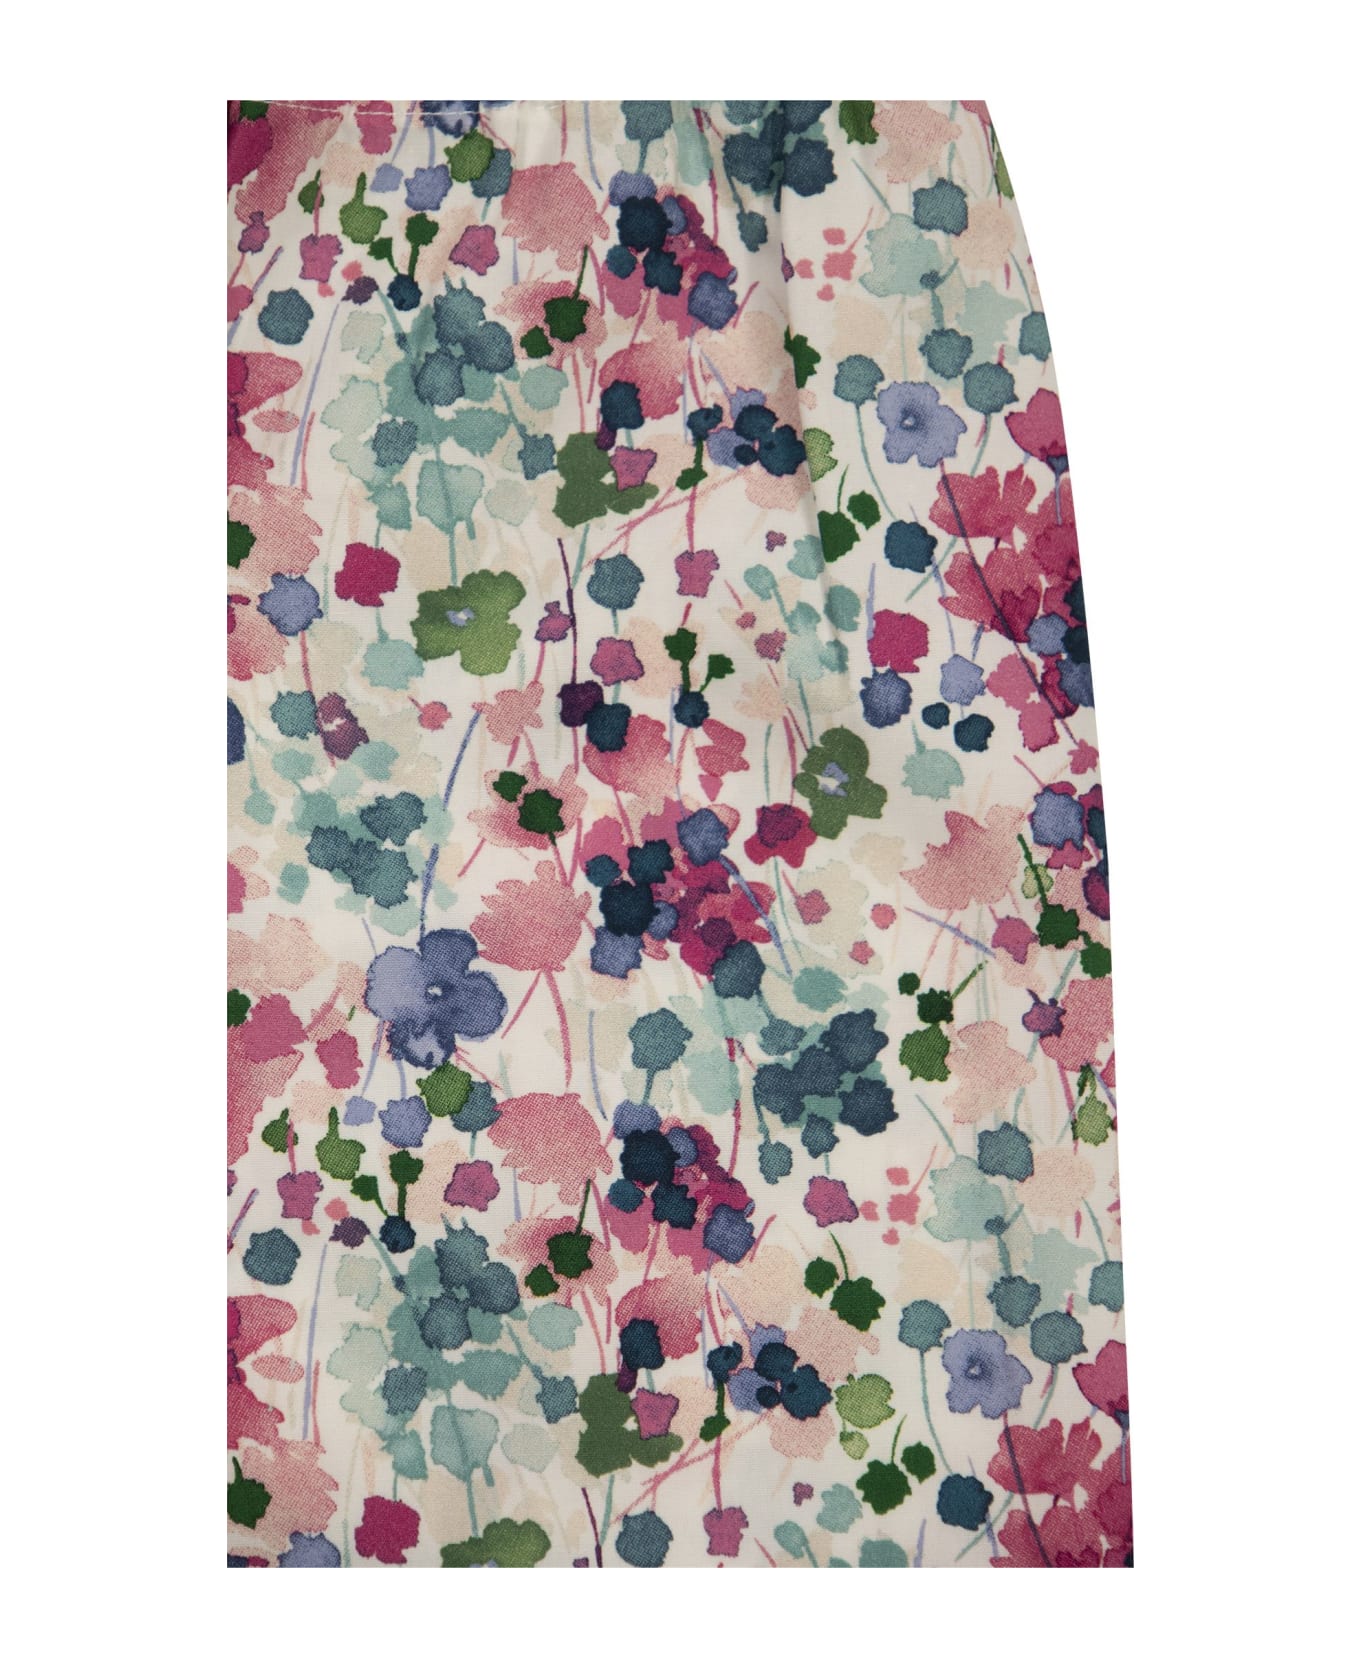 Il Gufo Capri Trousers With Flower Print - Cyclamin